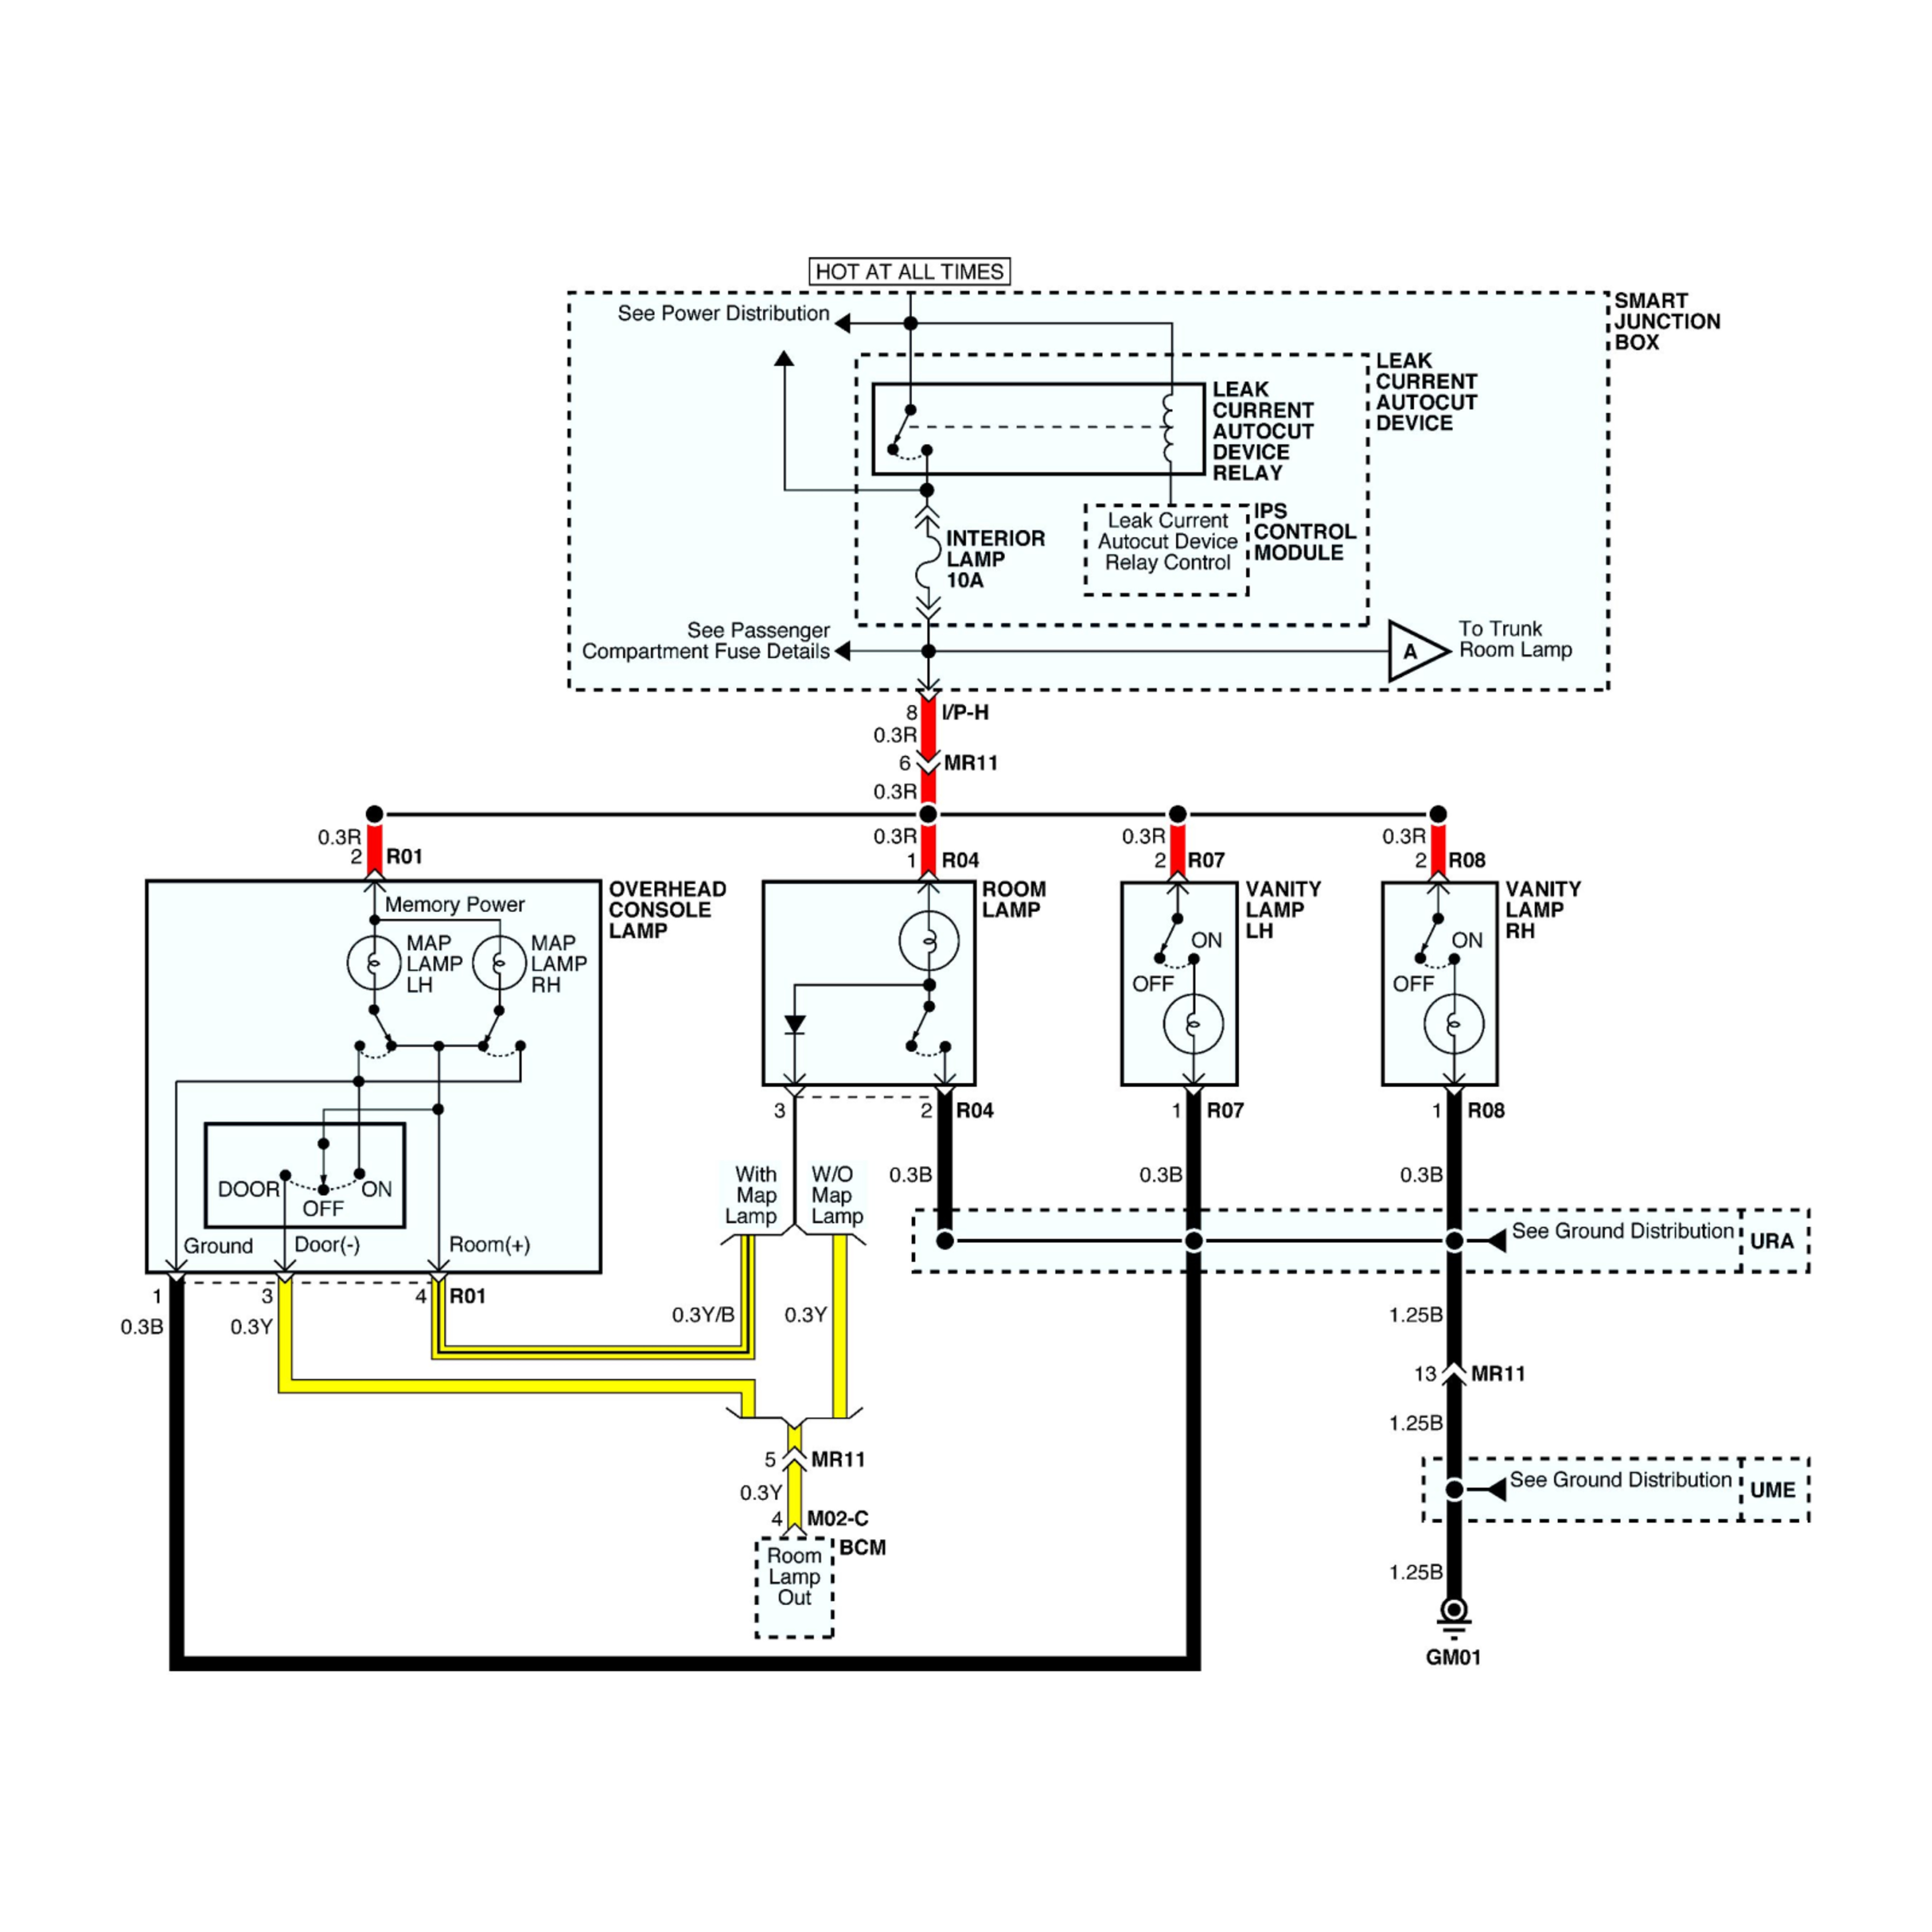 2004 Dodge Durango wiring diagrams example